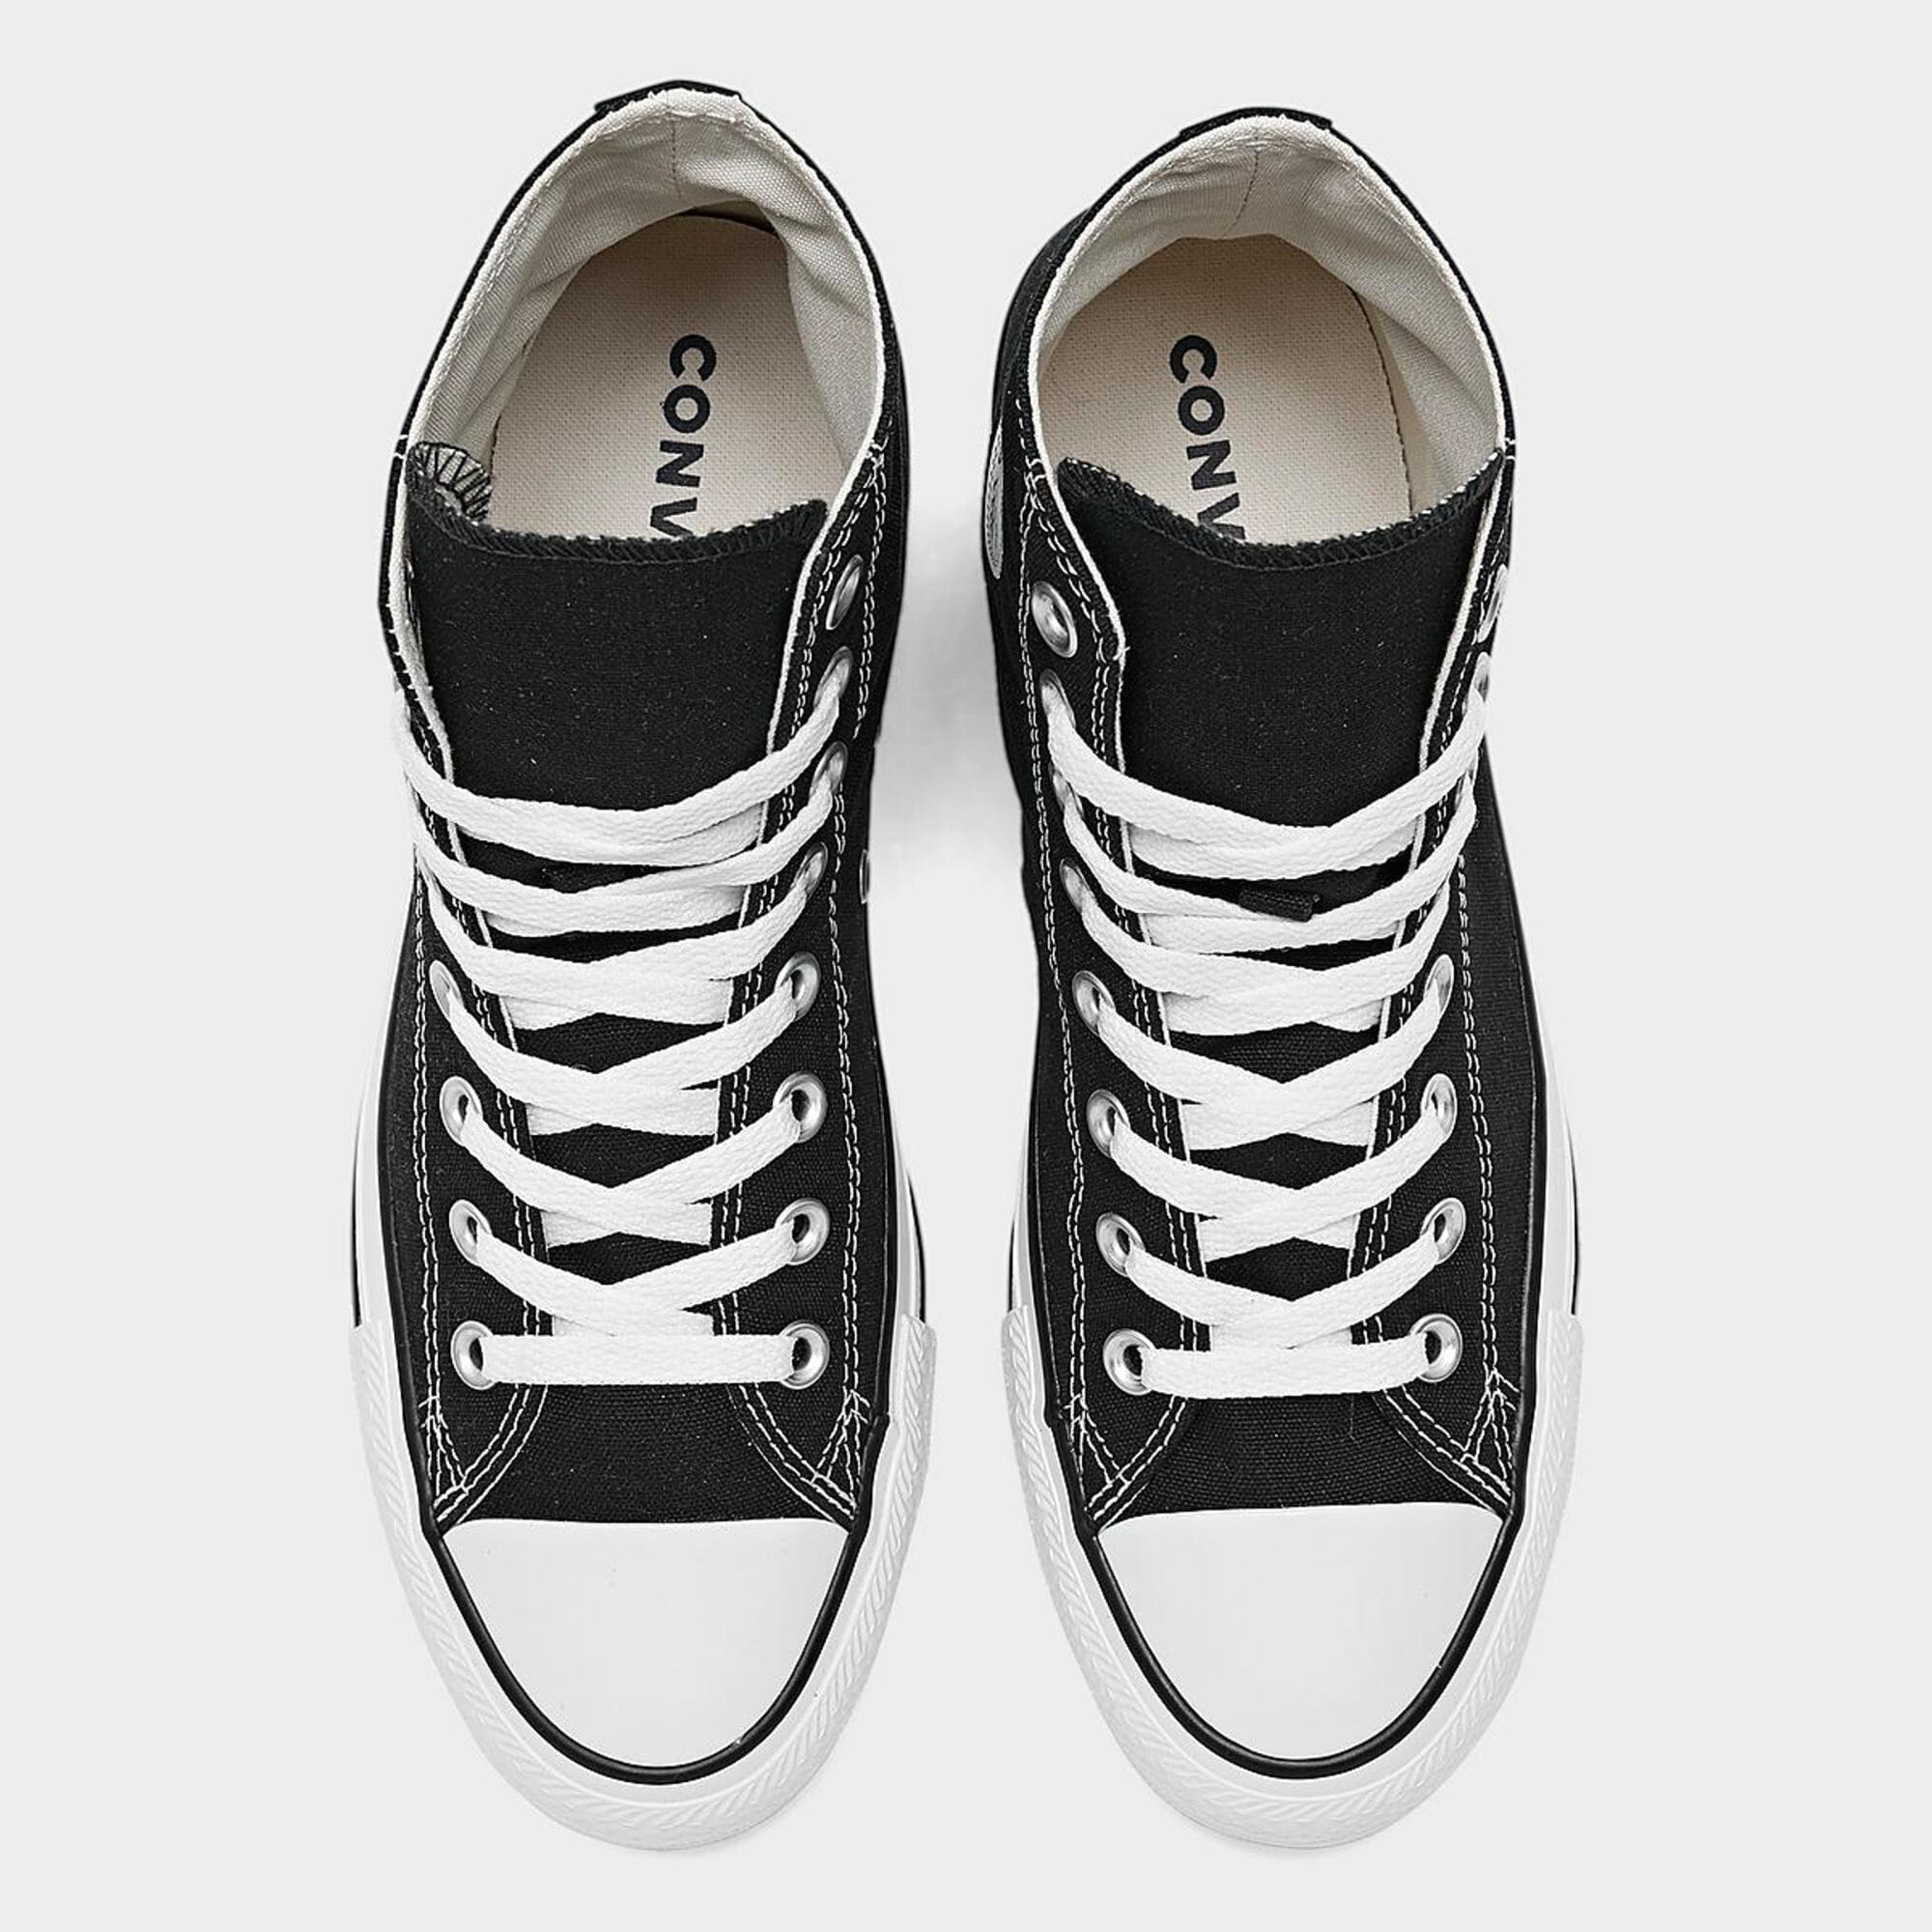 Women's Converse Chuck Taylor High Top Casual Shoes W9160 BLK | eBay